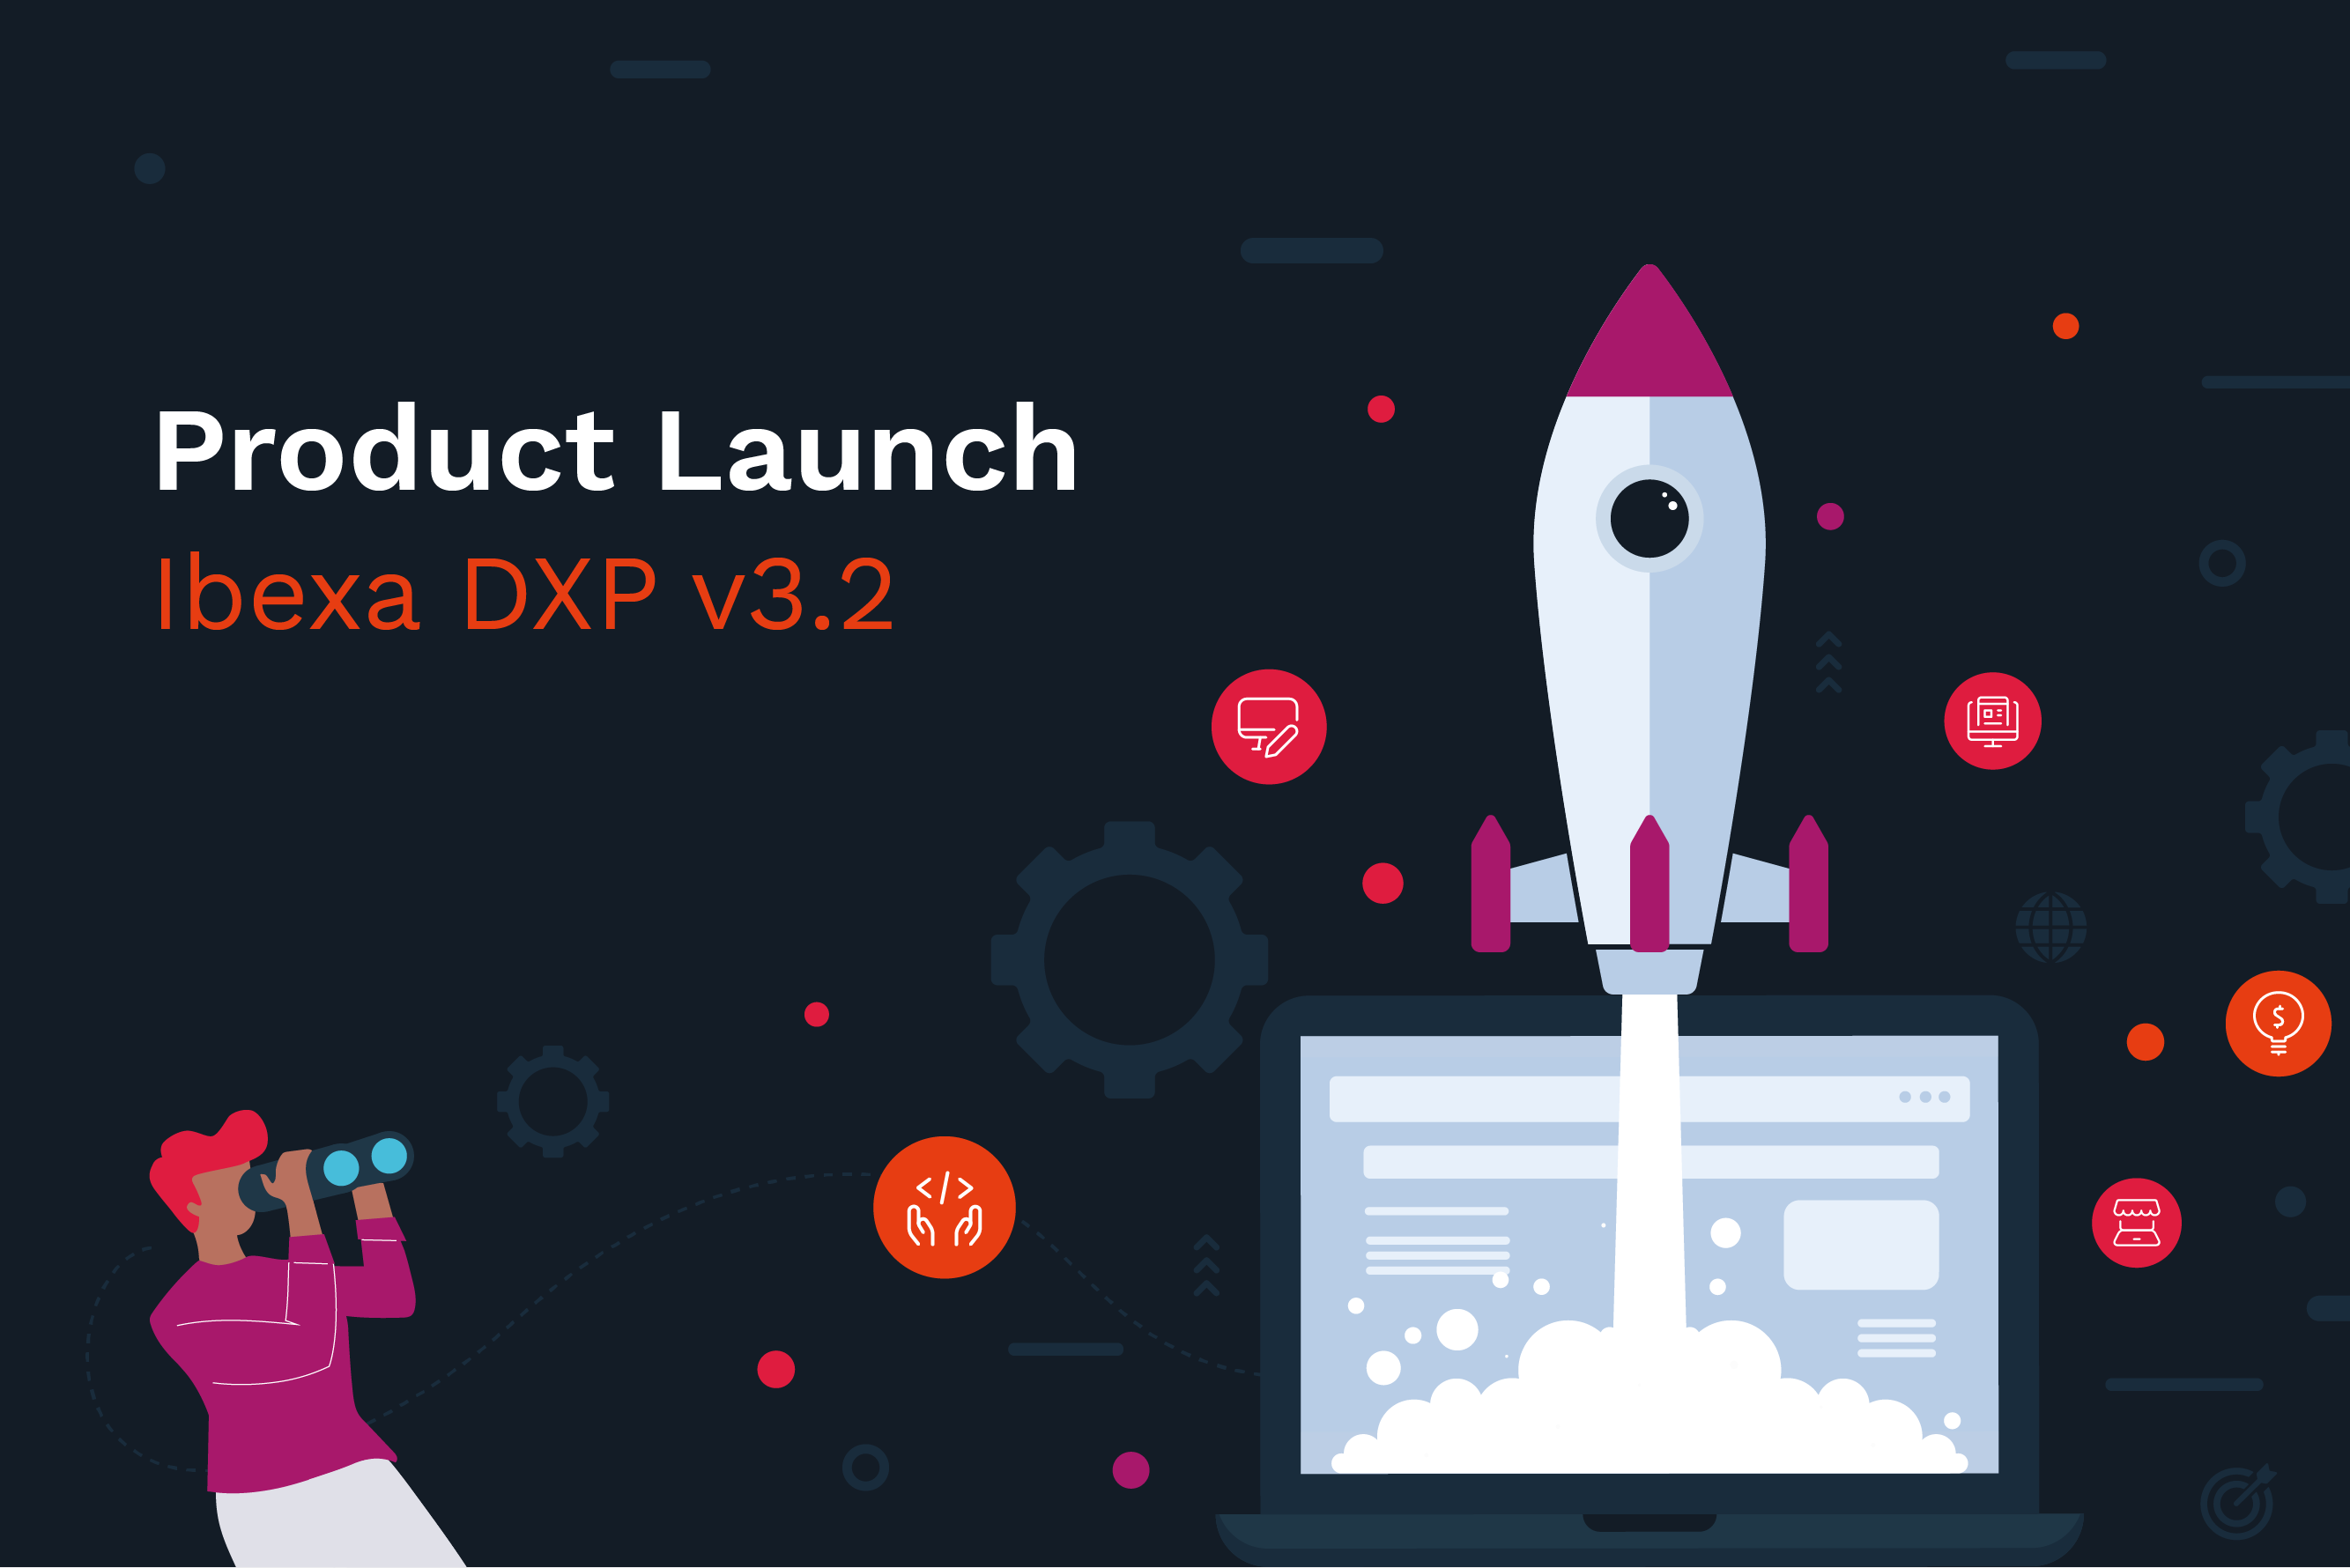 Product Launch: Introducing Ibexa DXP 3.2